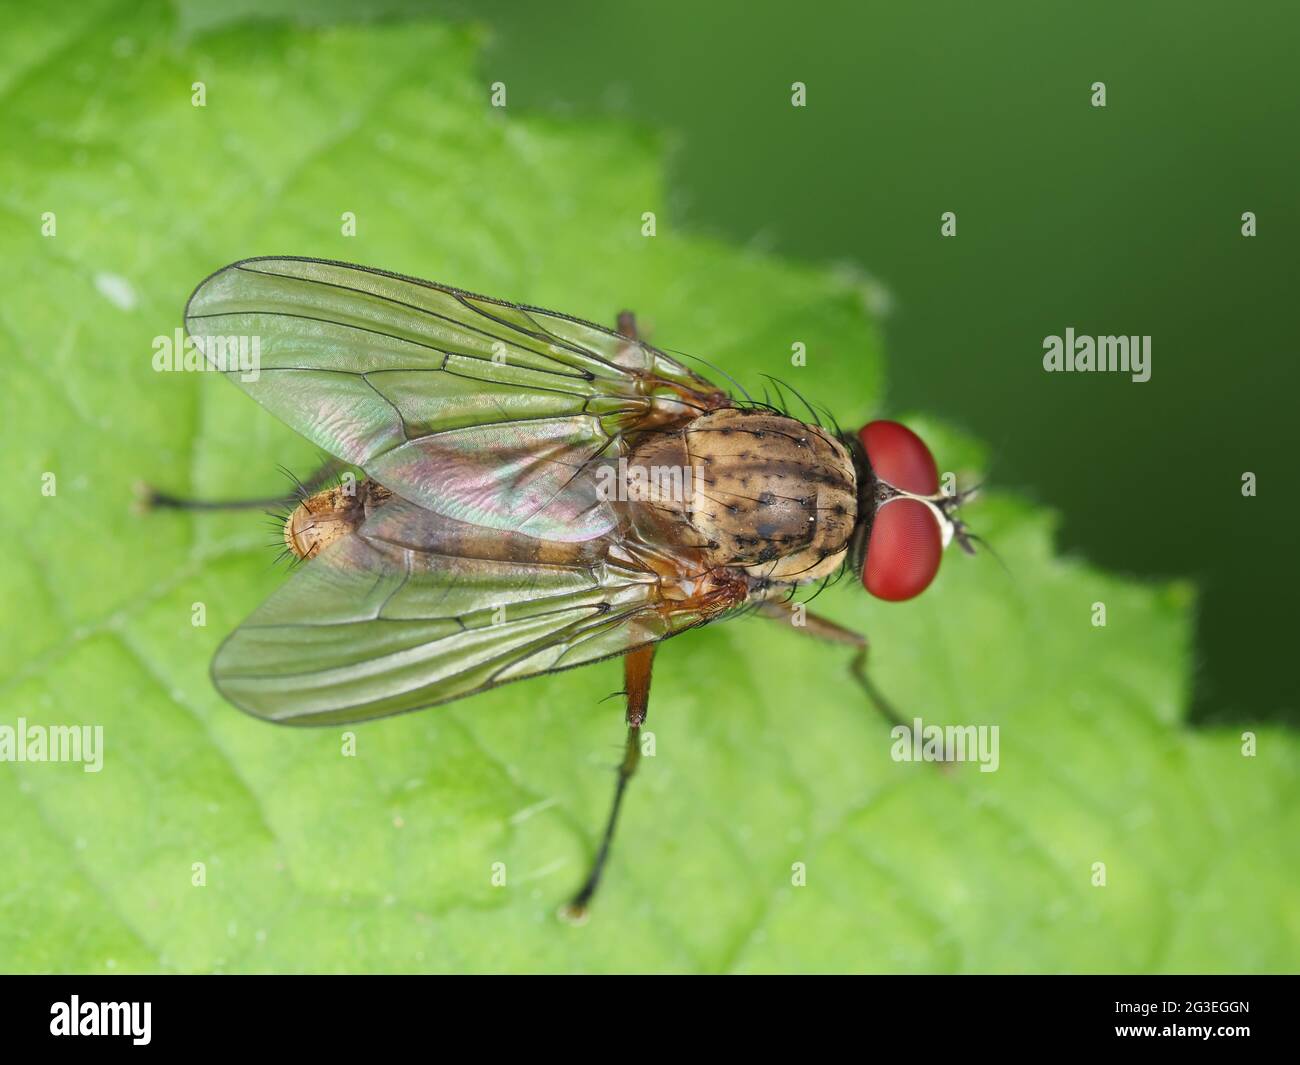 Muscidae fliegen - Insektenmakro Stockfoto